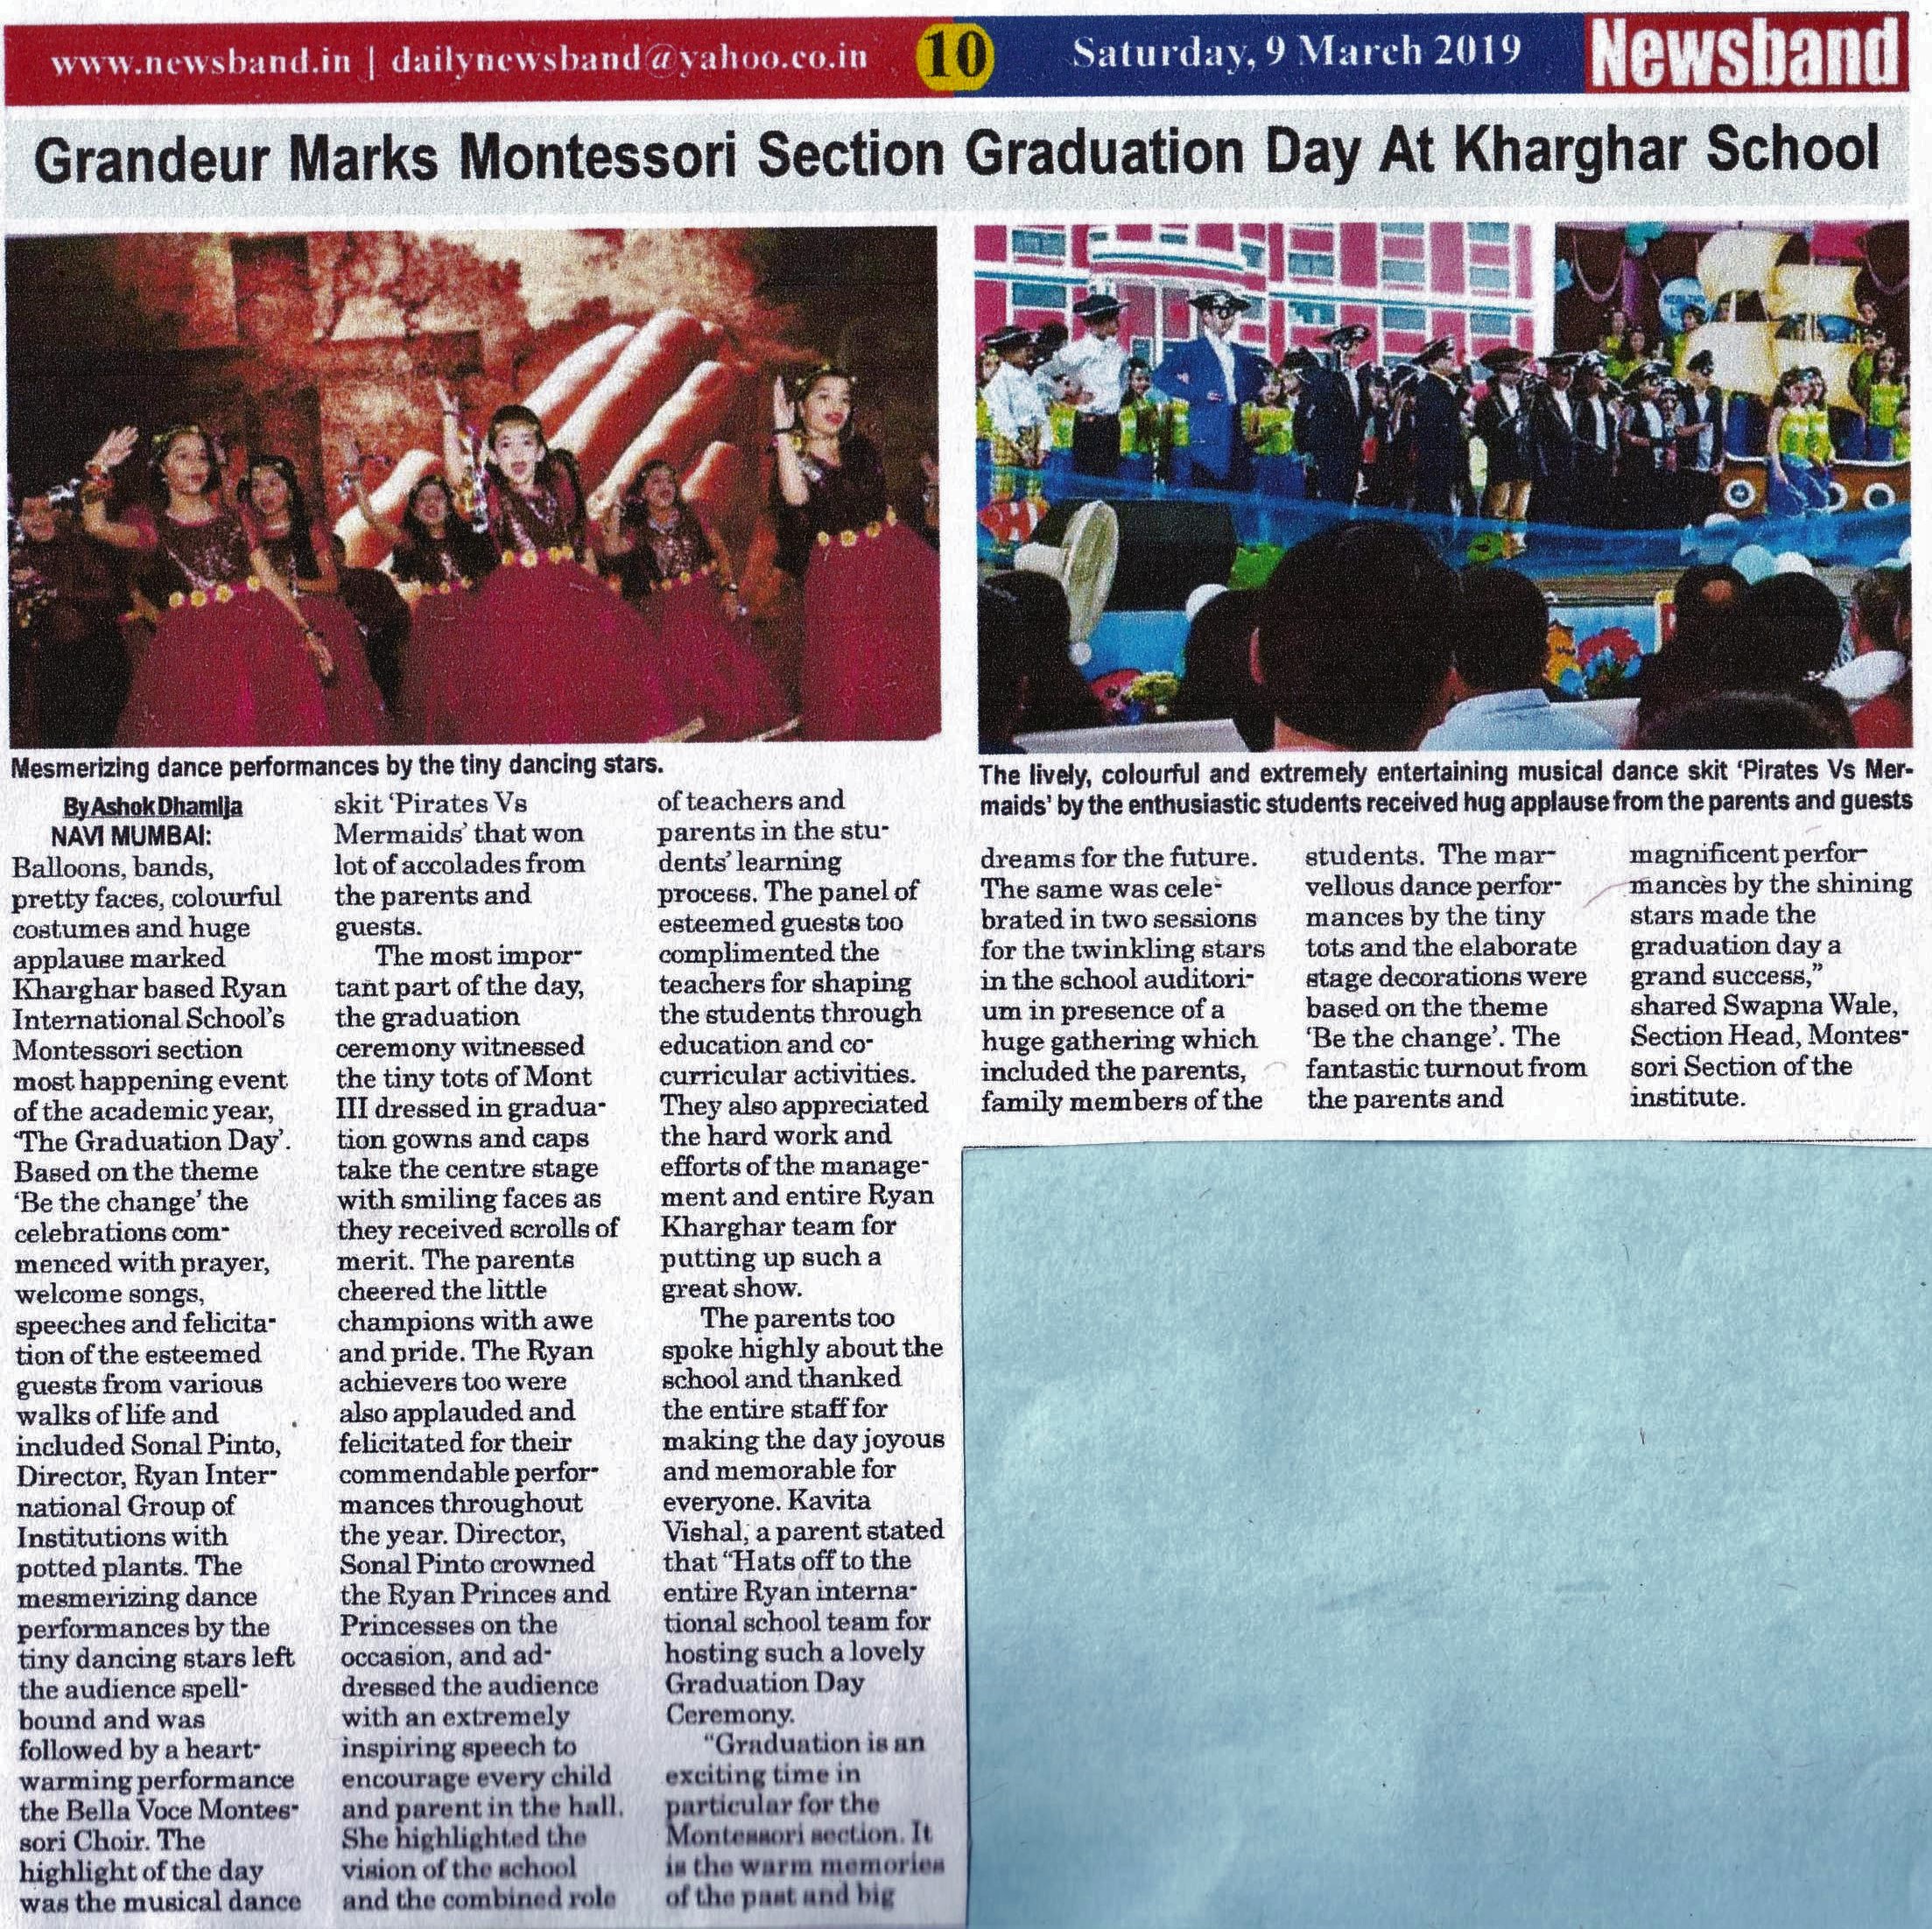 Grandeur marks Montessori section graduation day at Kharghar School was mentioned in Newsband - Ryan International School, Kharghar